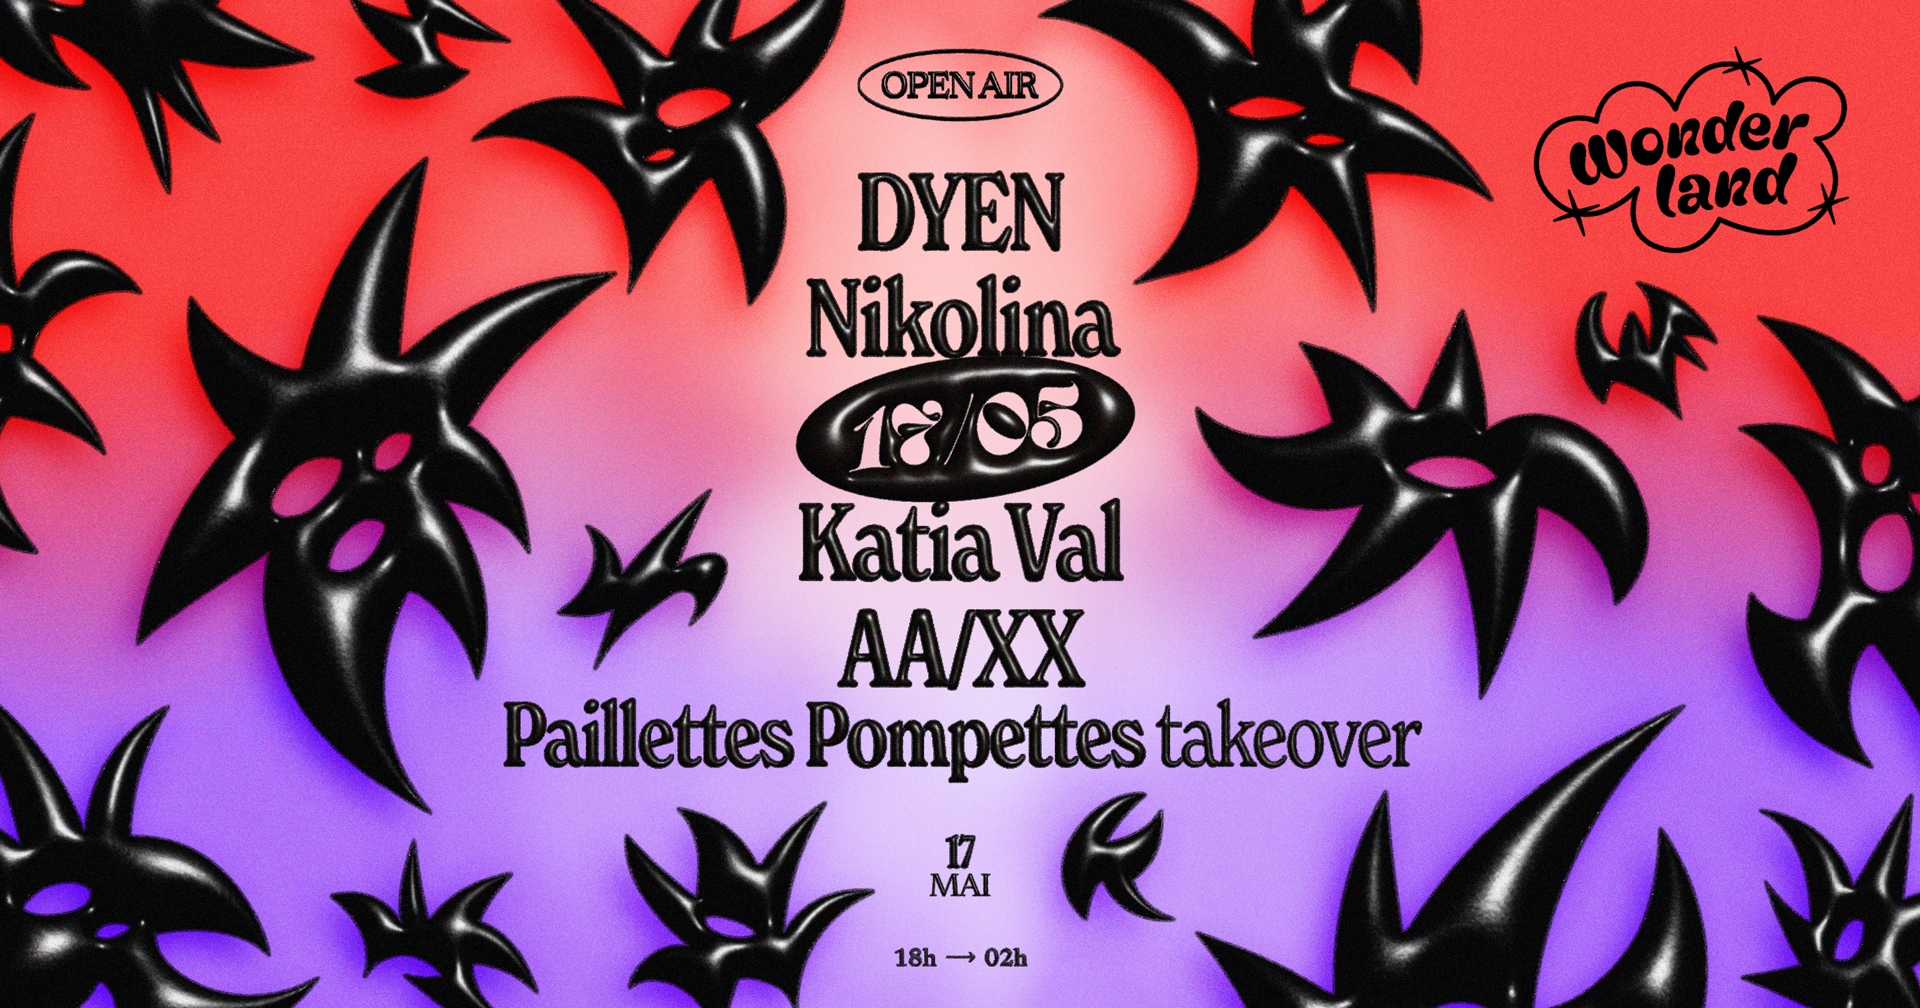 [Cancelled] Wonderland invite: DYEN - Nikolina - Katia Val - AA/XX - Paillettes Pompettes - フライヤー表